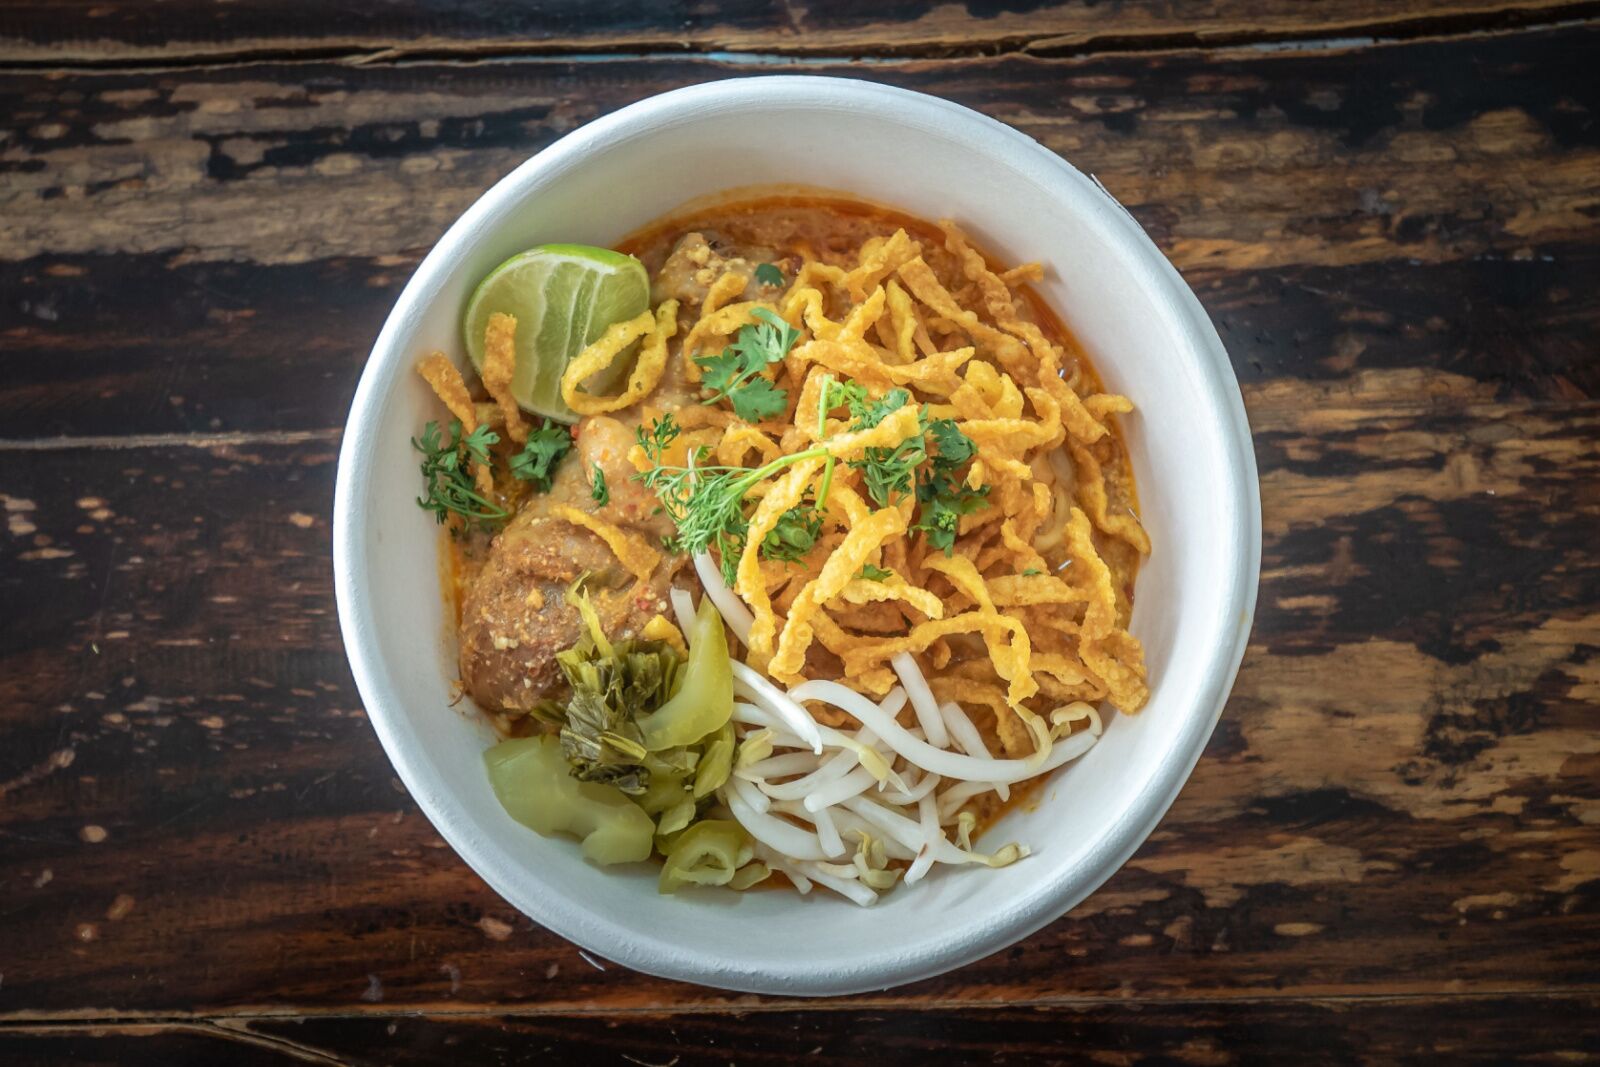 vegetarian food in thailand - coconut noodles